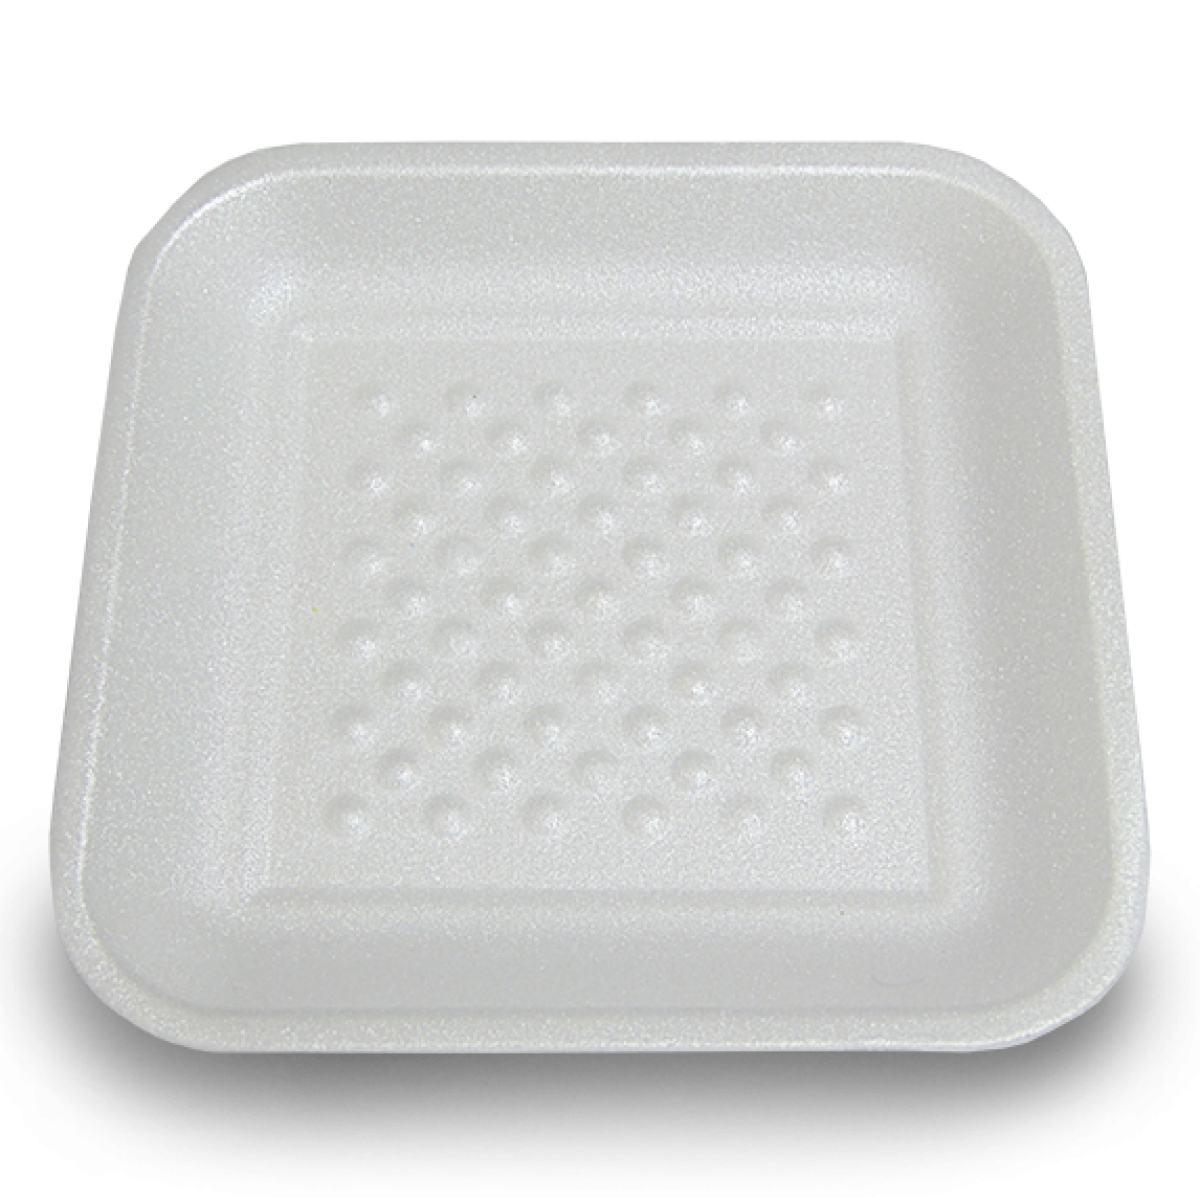 foam tray (white) small / 165*147*25